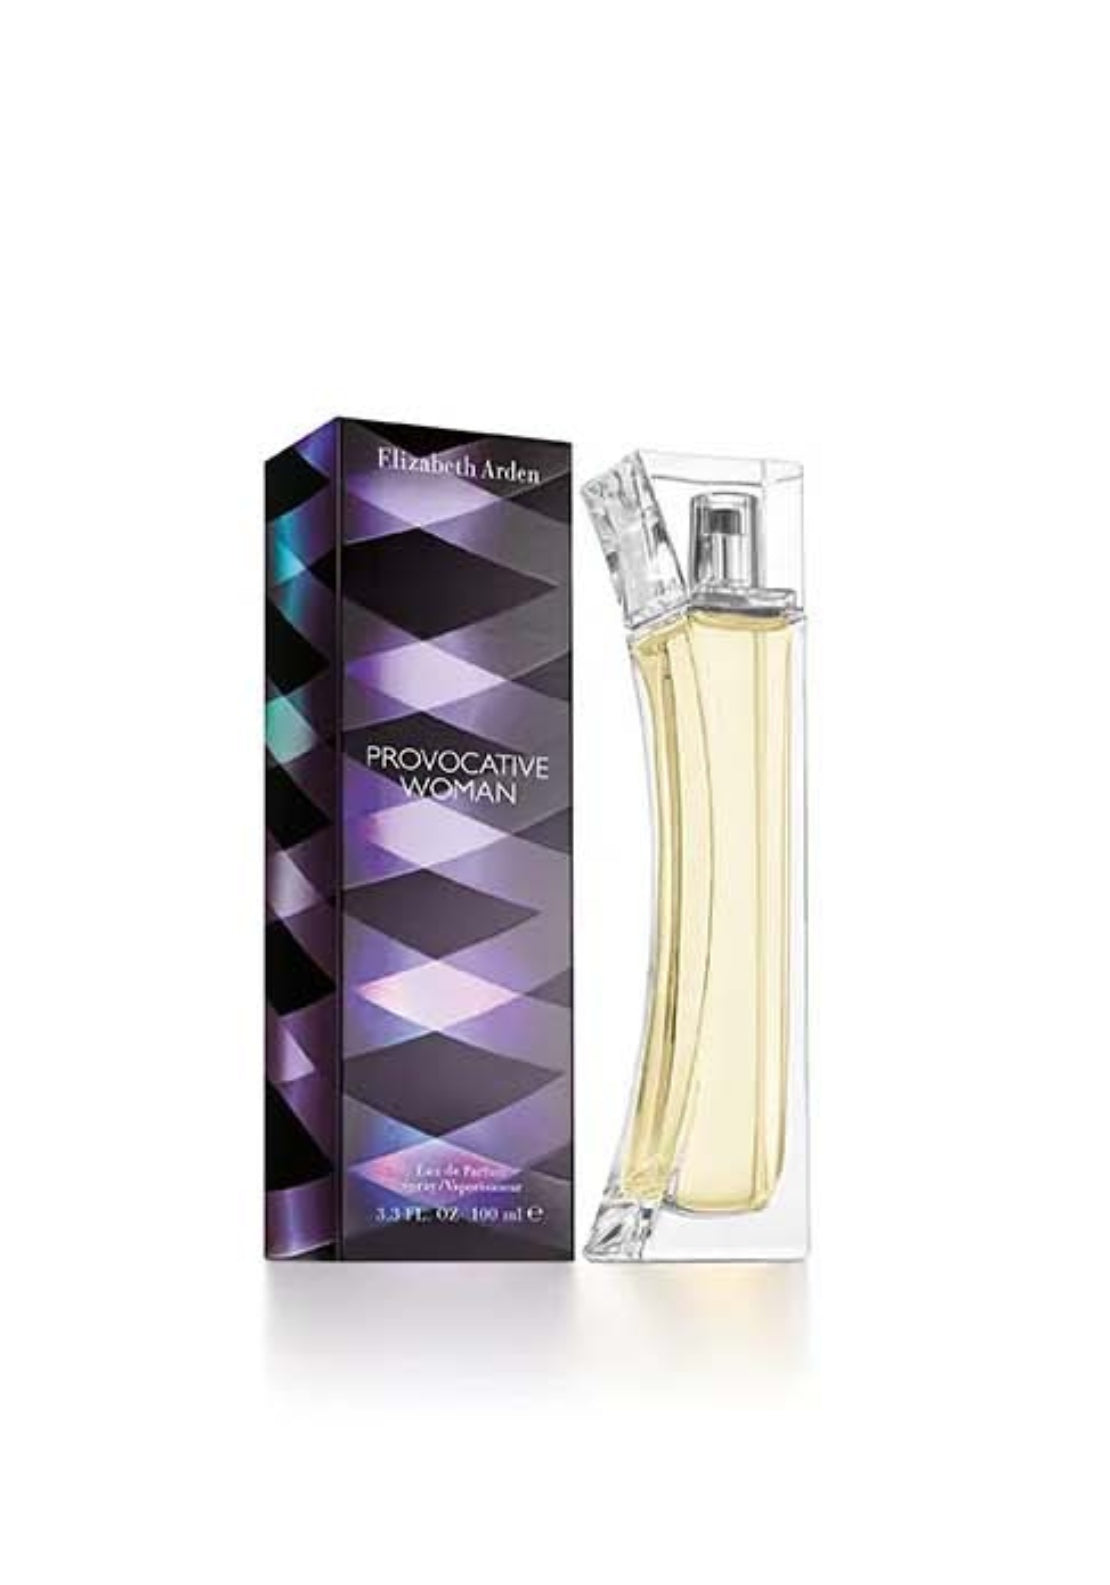 Elizabeth Arden Provocative Woman Eau de Parfum Spray 1 Shaws Department Stores